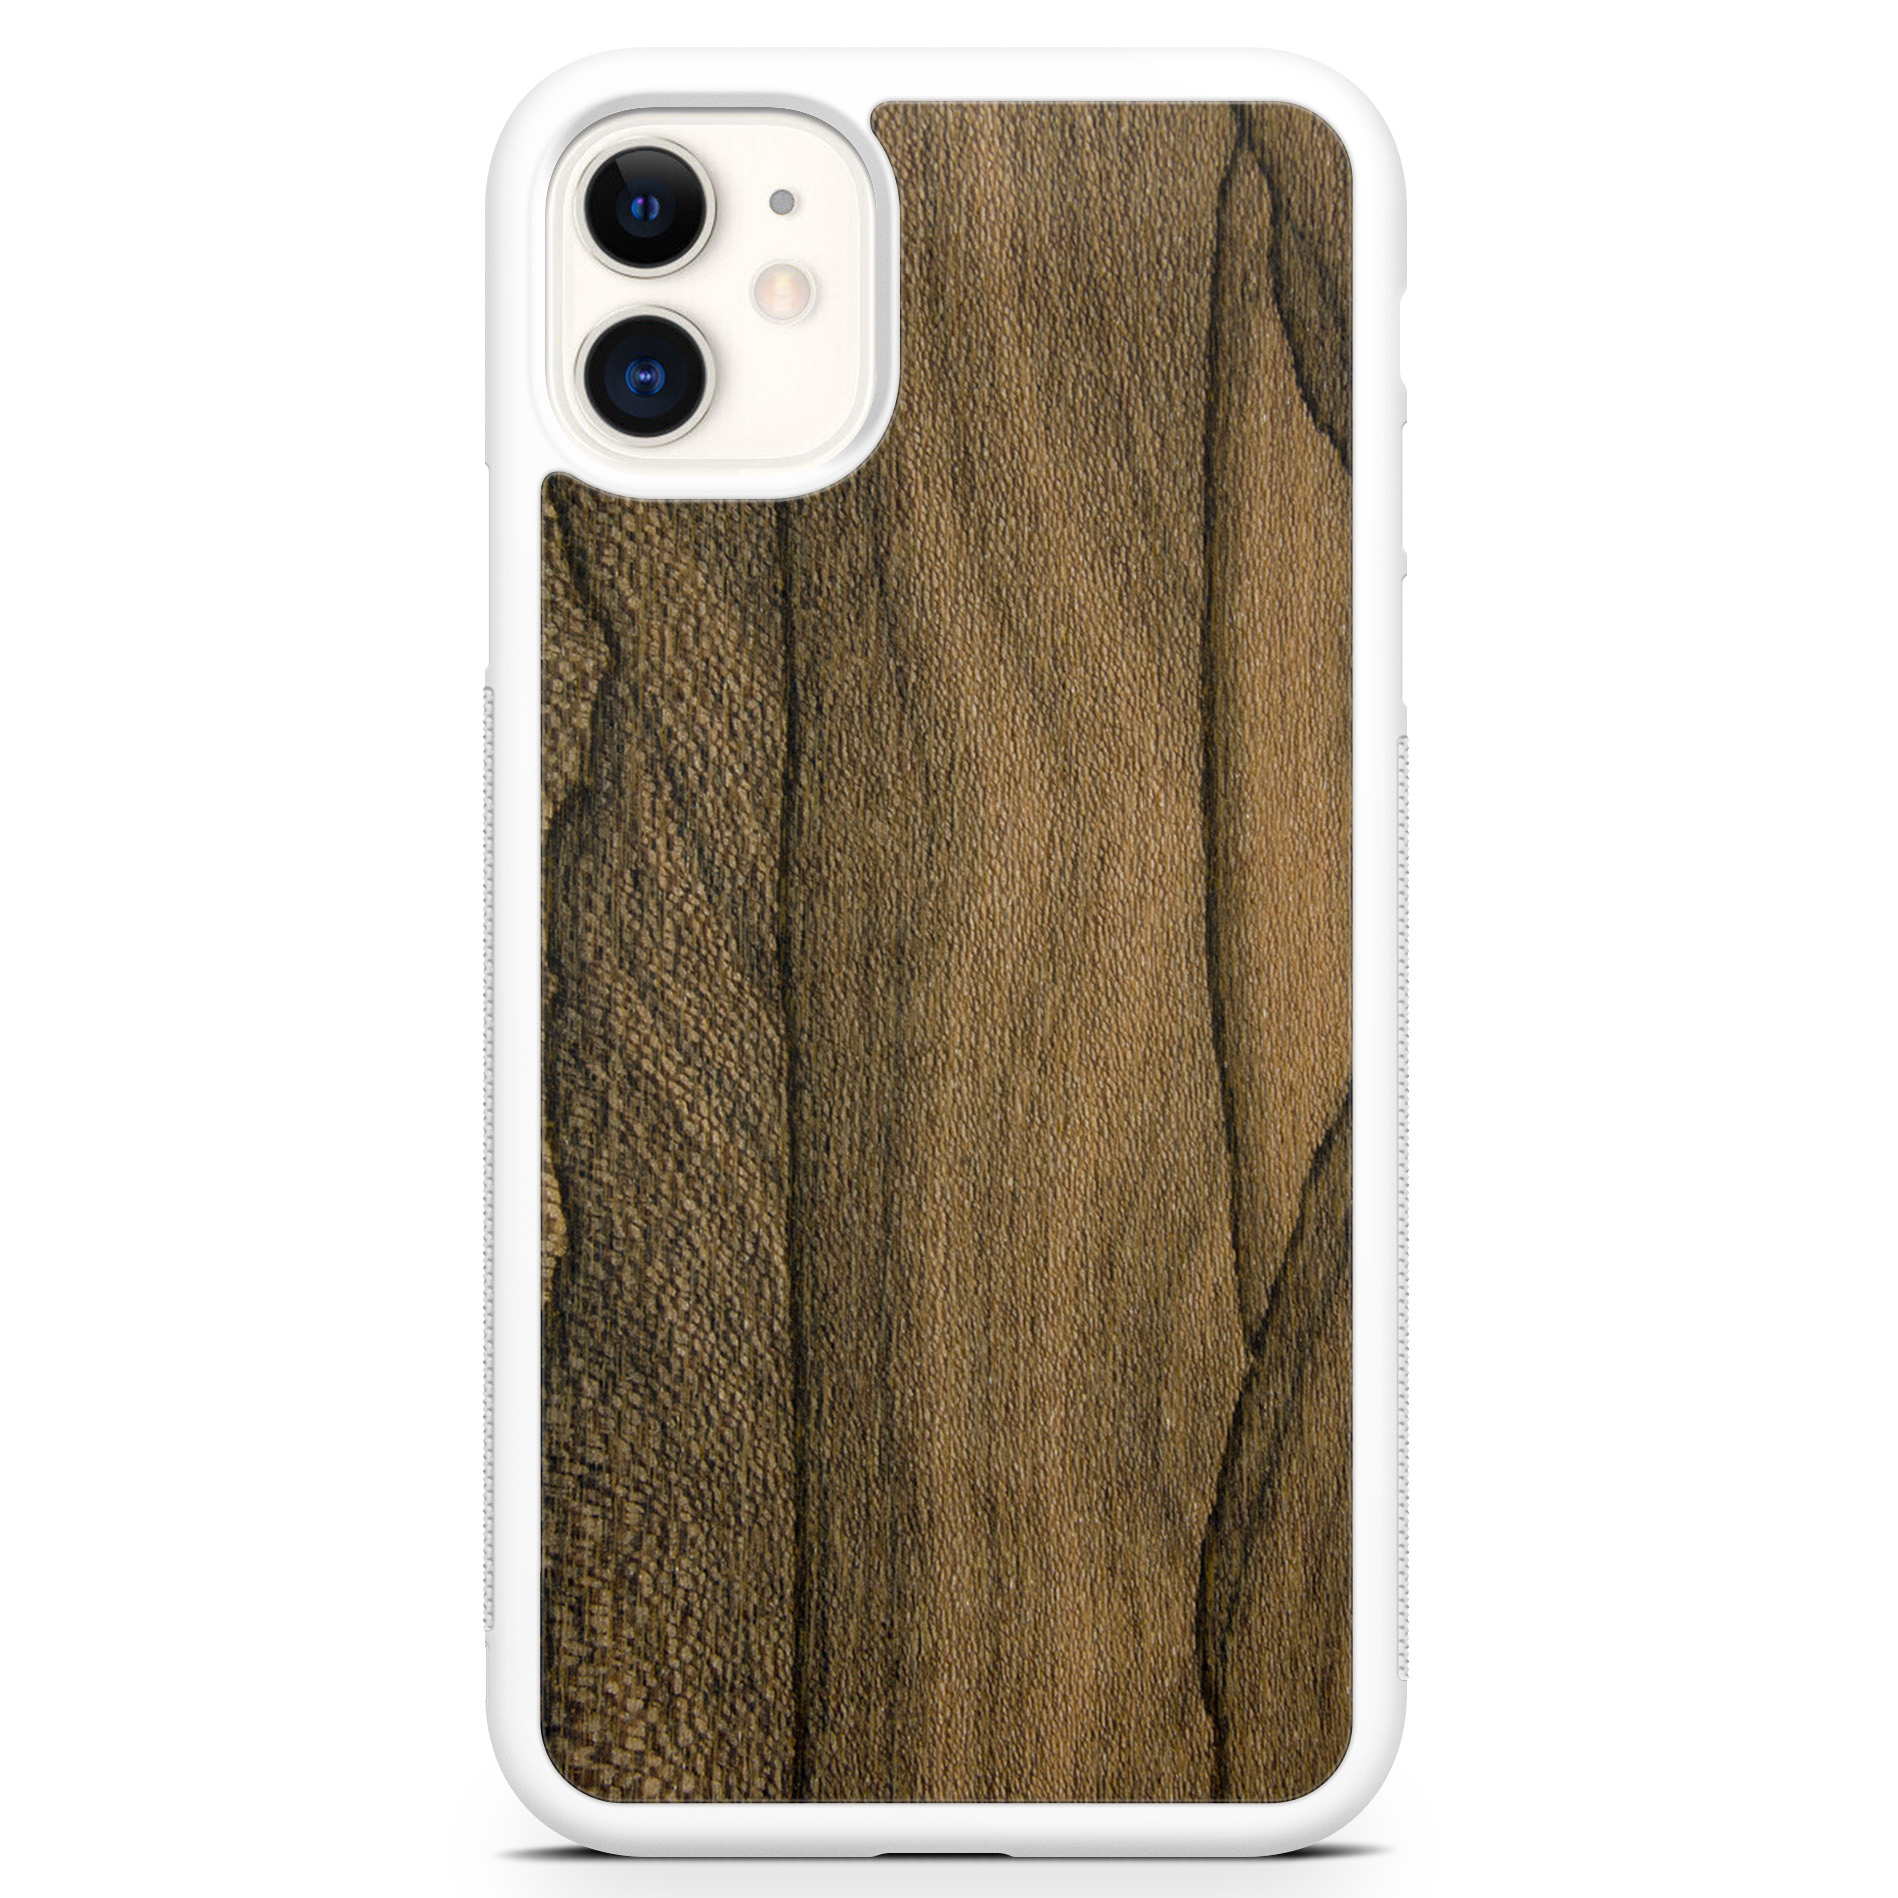 Coque iPhone 11 Ziricote Wood Blanc